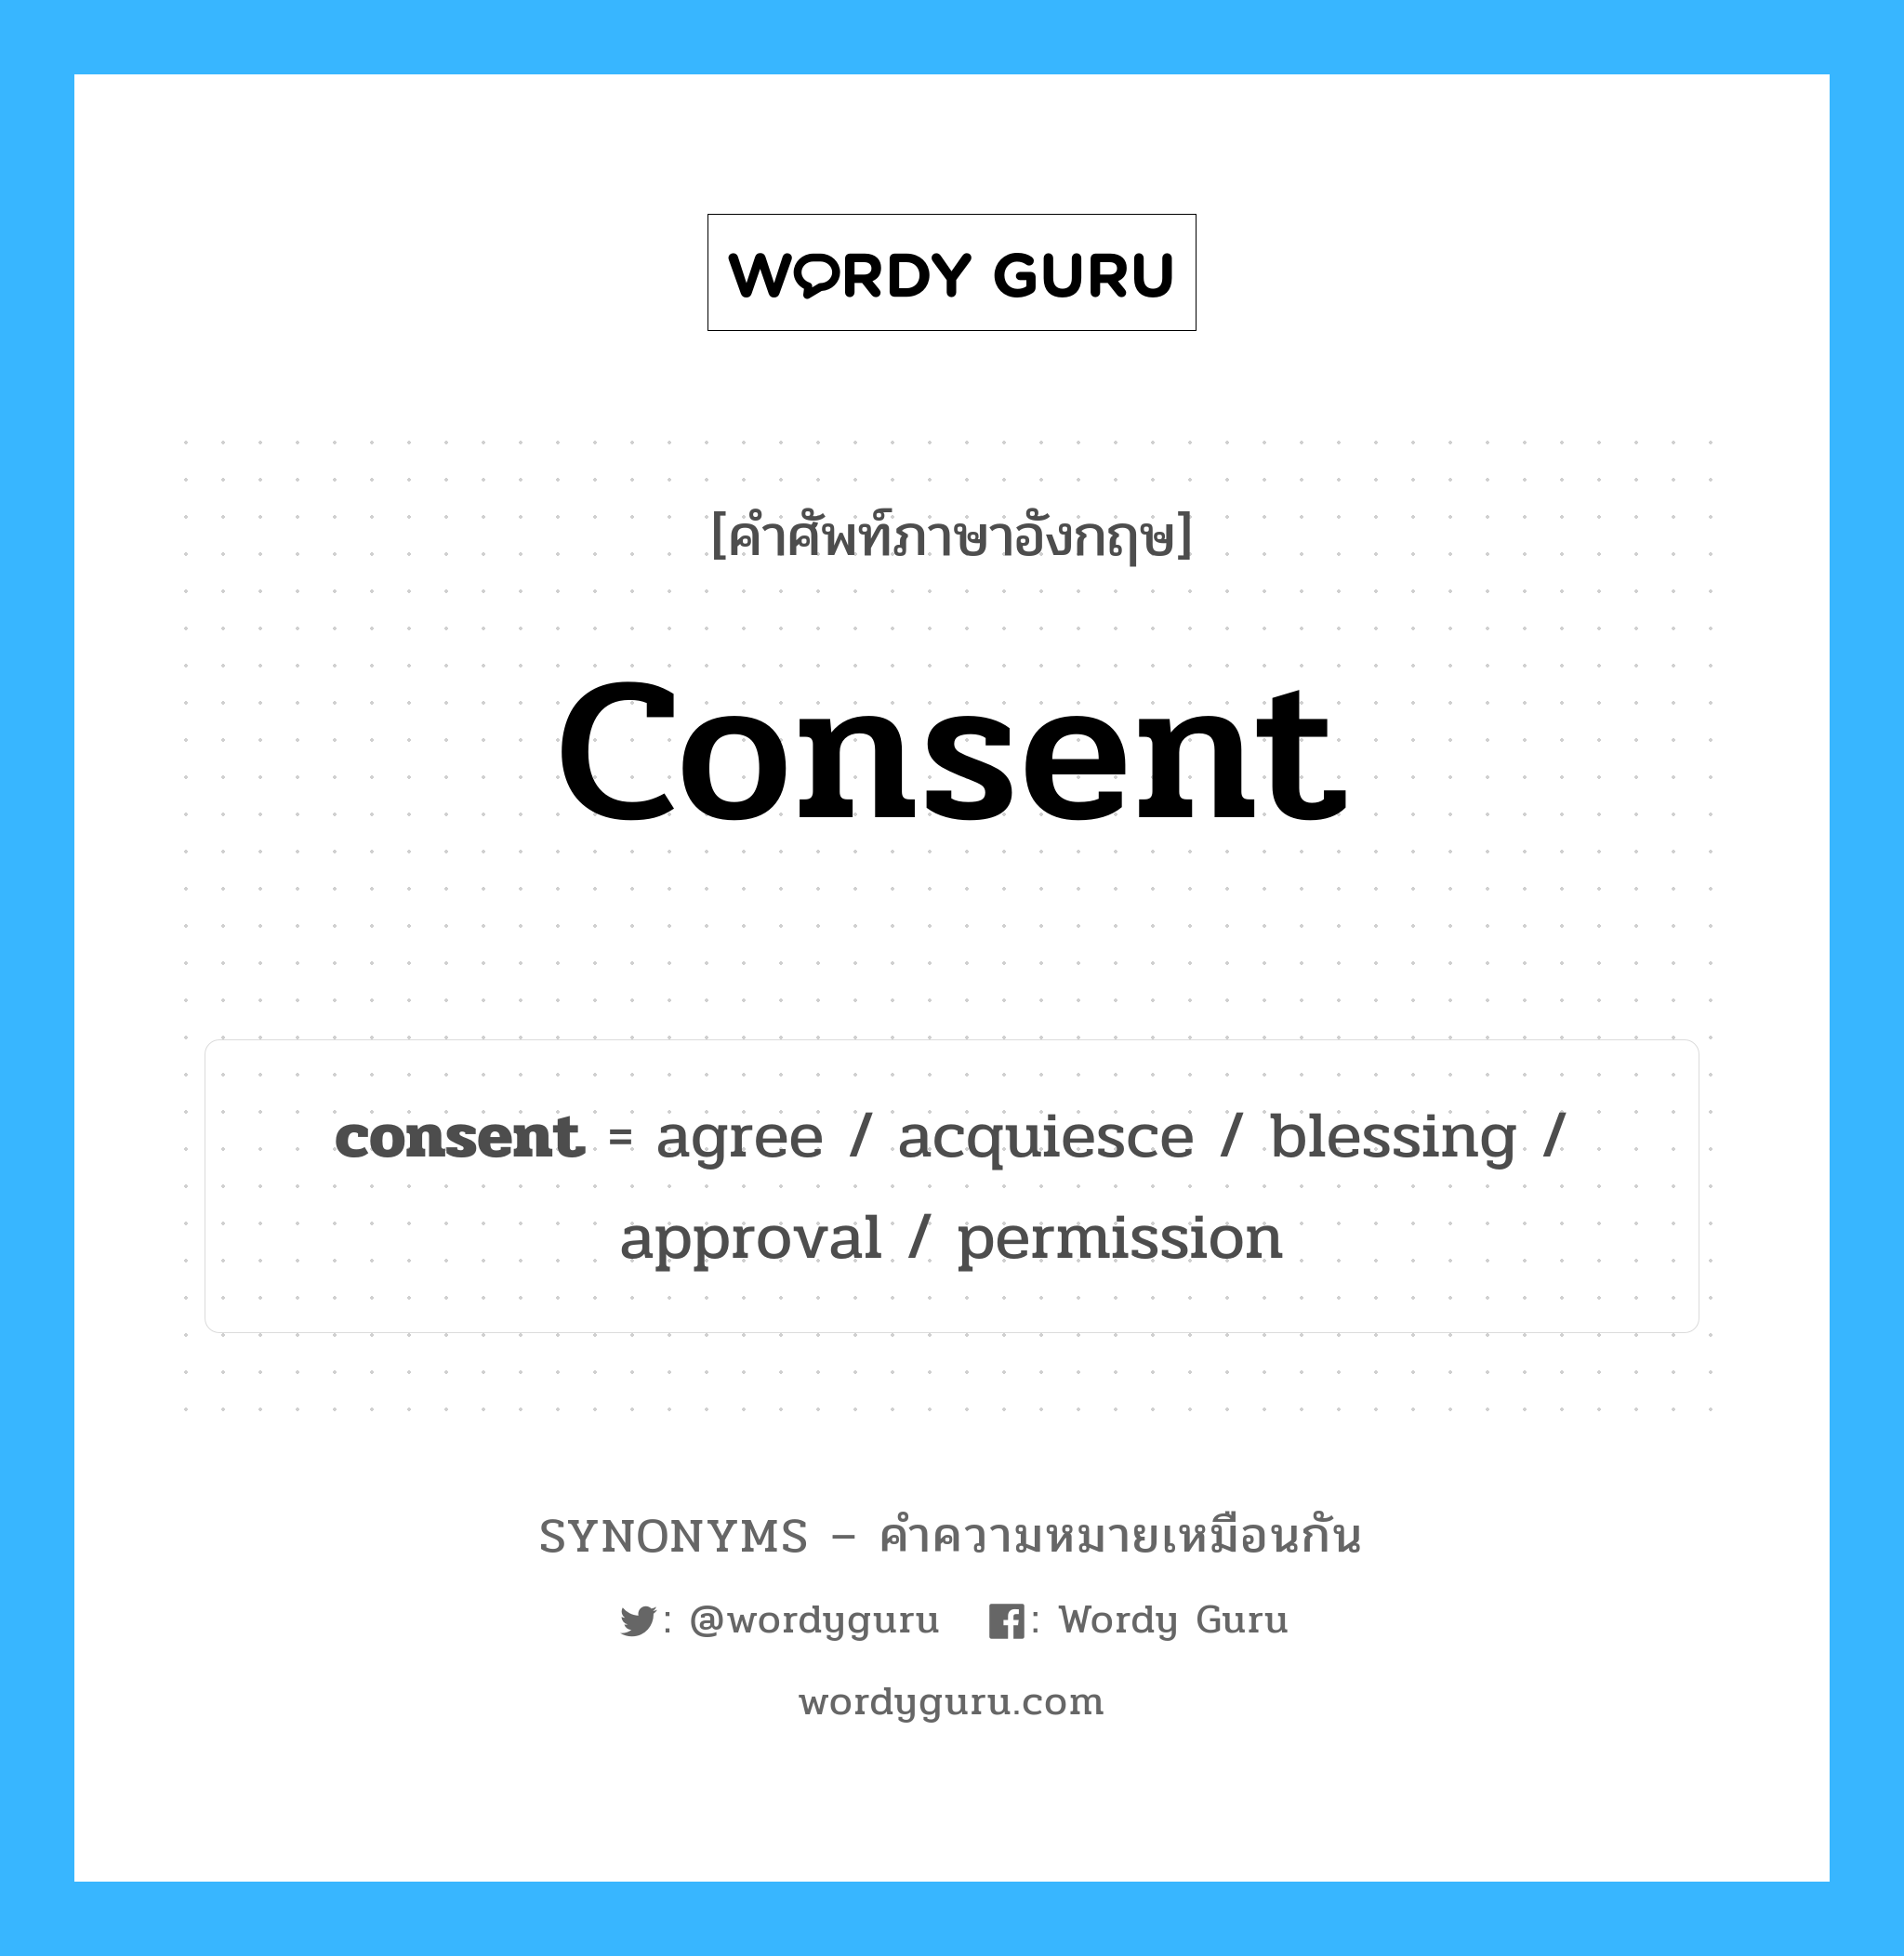 blessing เป็นหนึ่งใน consent และมีคำอื่น ๆ อีกดังนี้, คำศัพท์ภาษาอังกฤษ blessing ความหมายคล้ายกันกับ consent แปลว่า พร หมวด consent